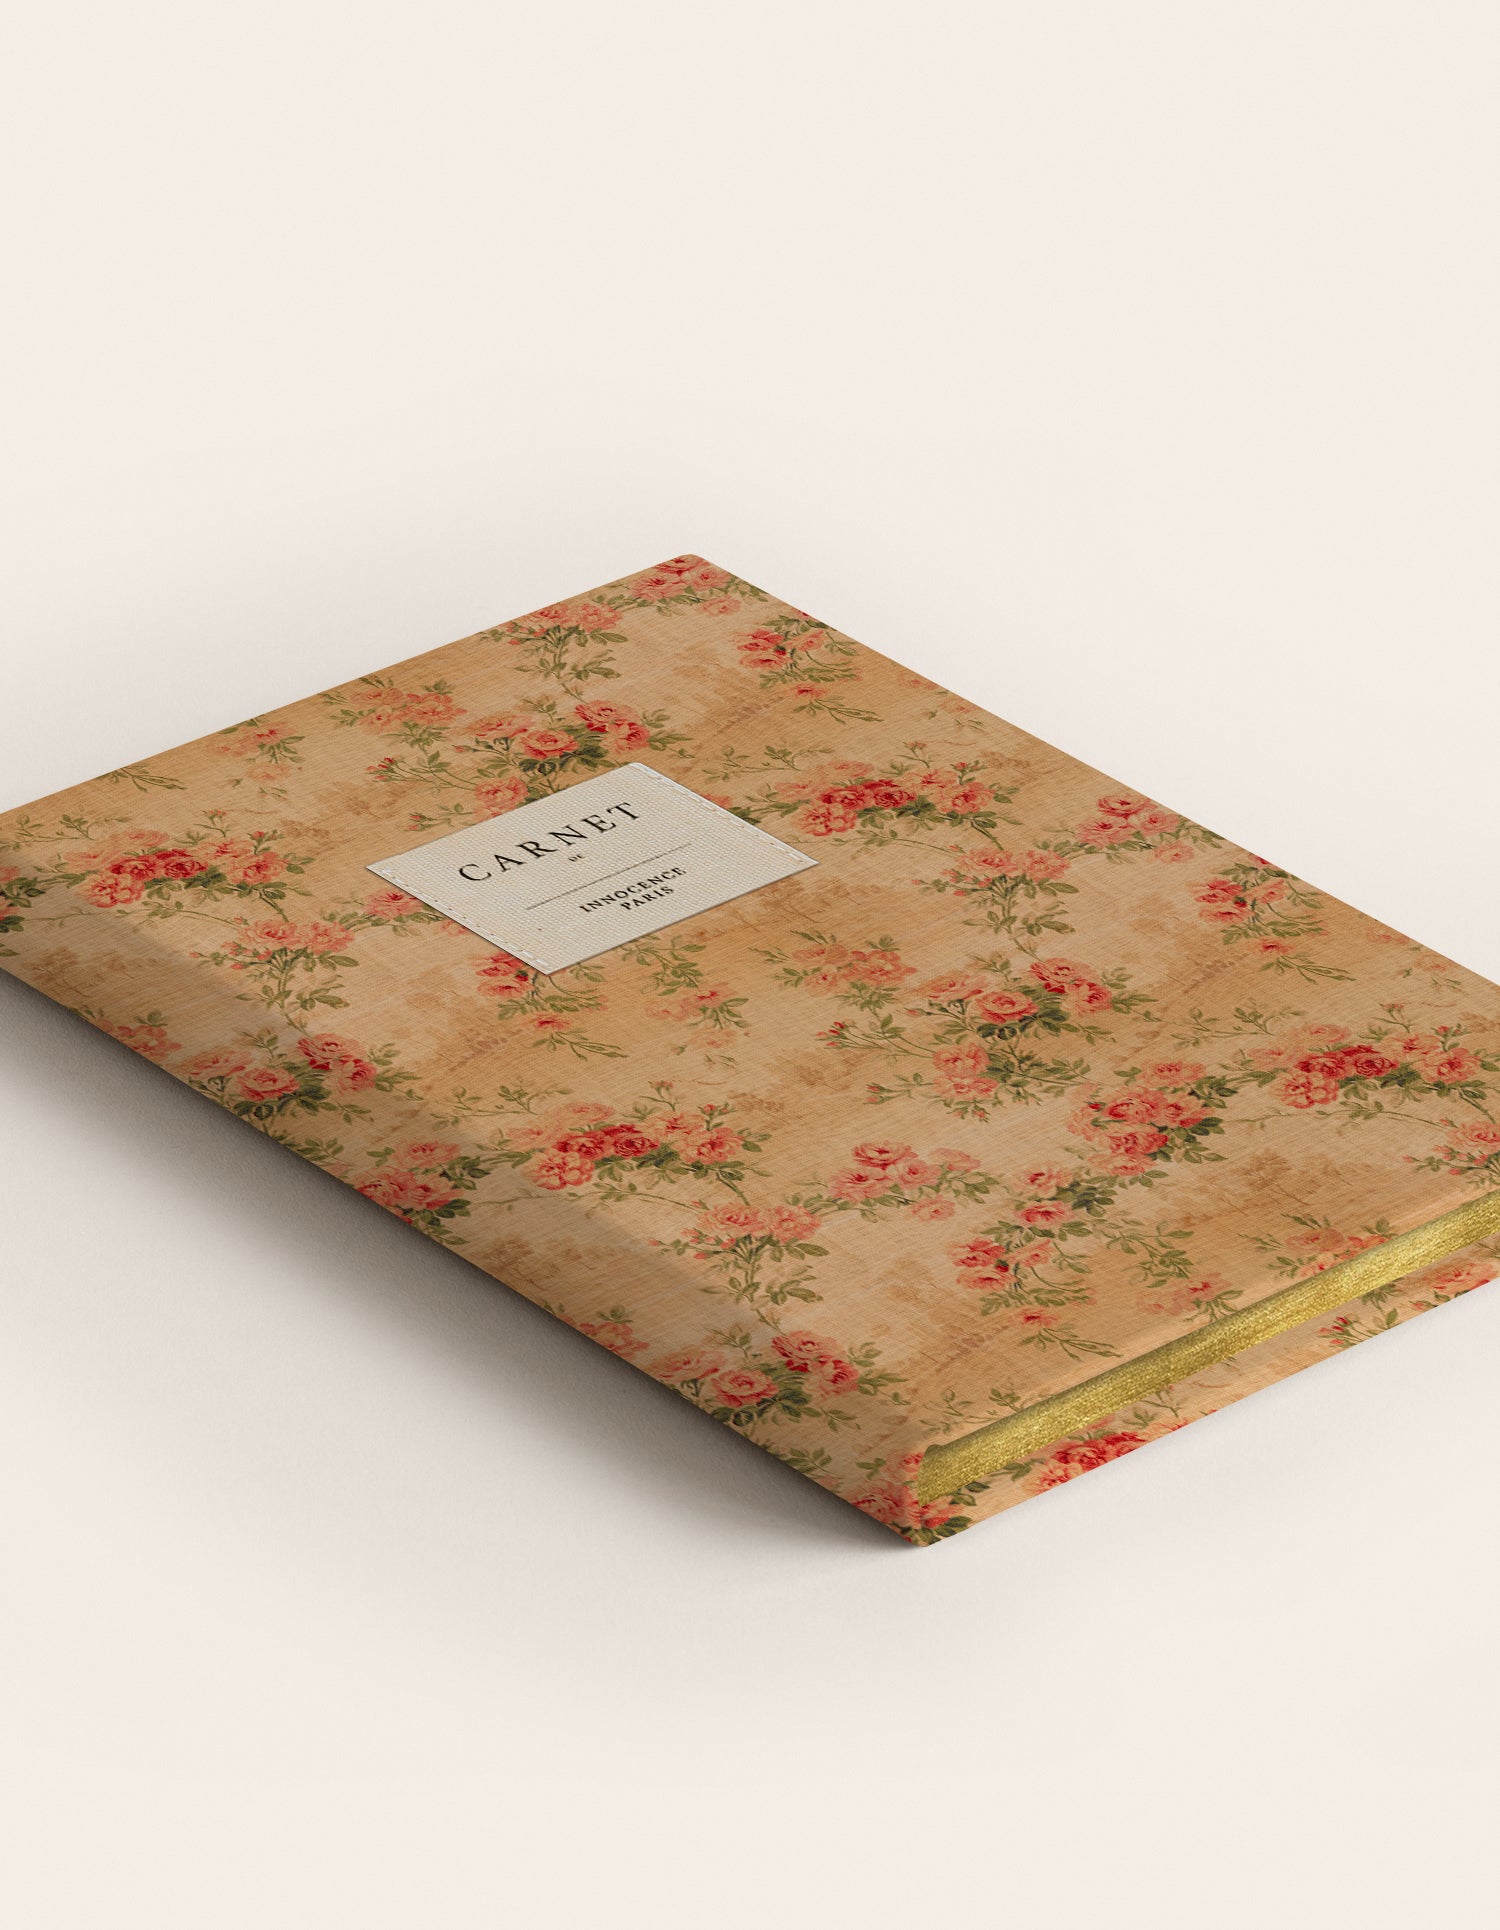 Flowered treasure notebook